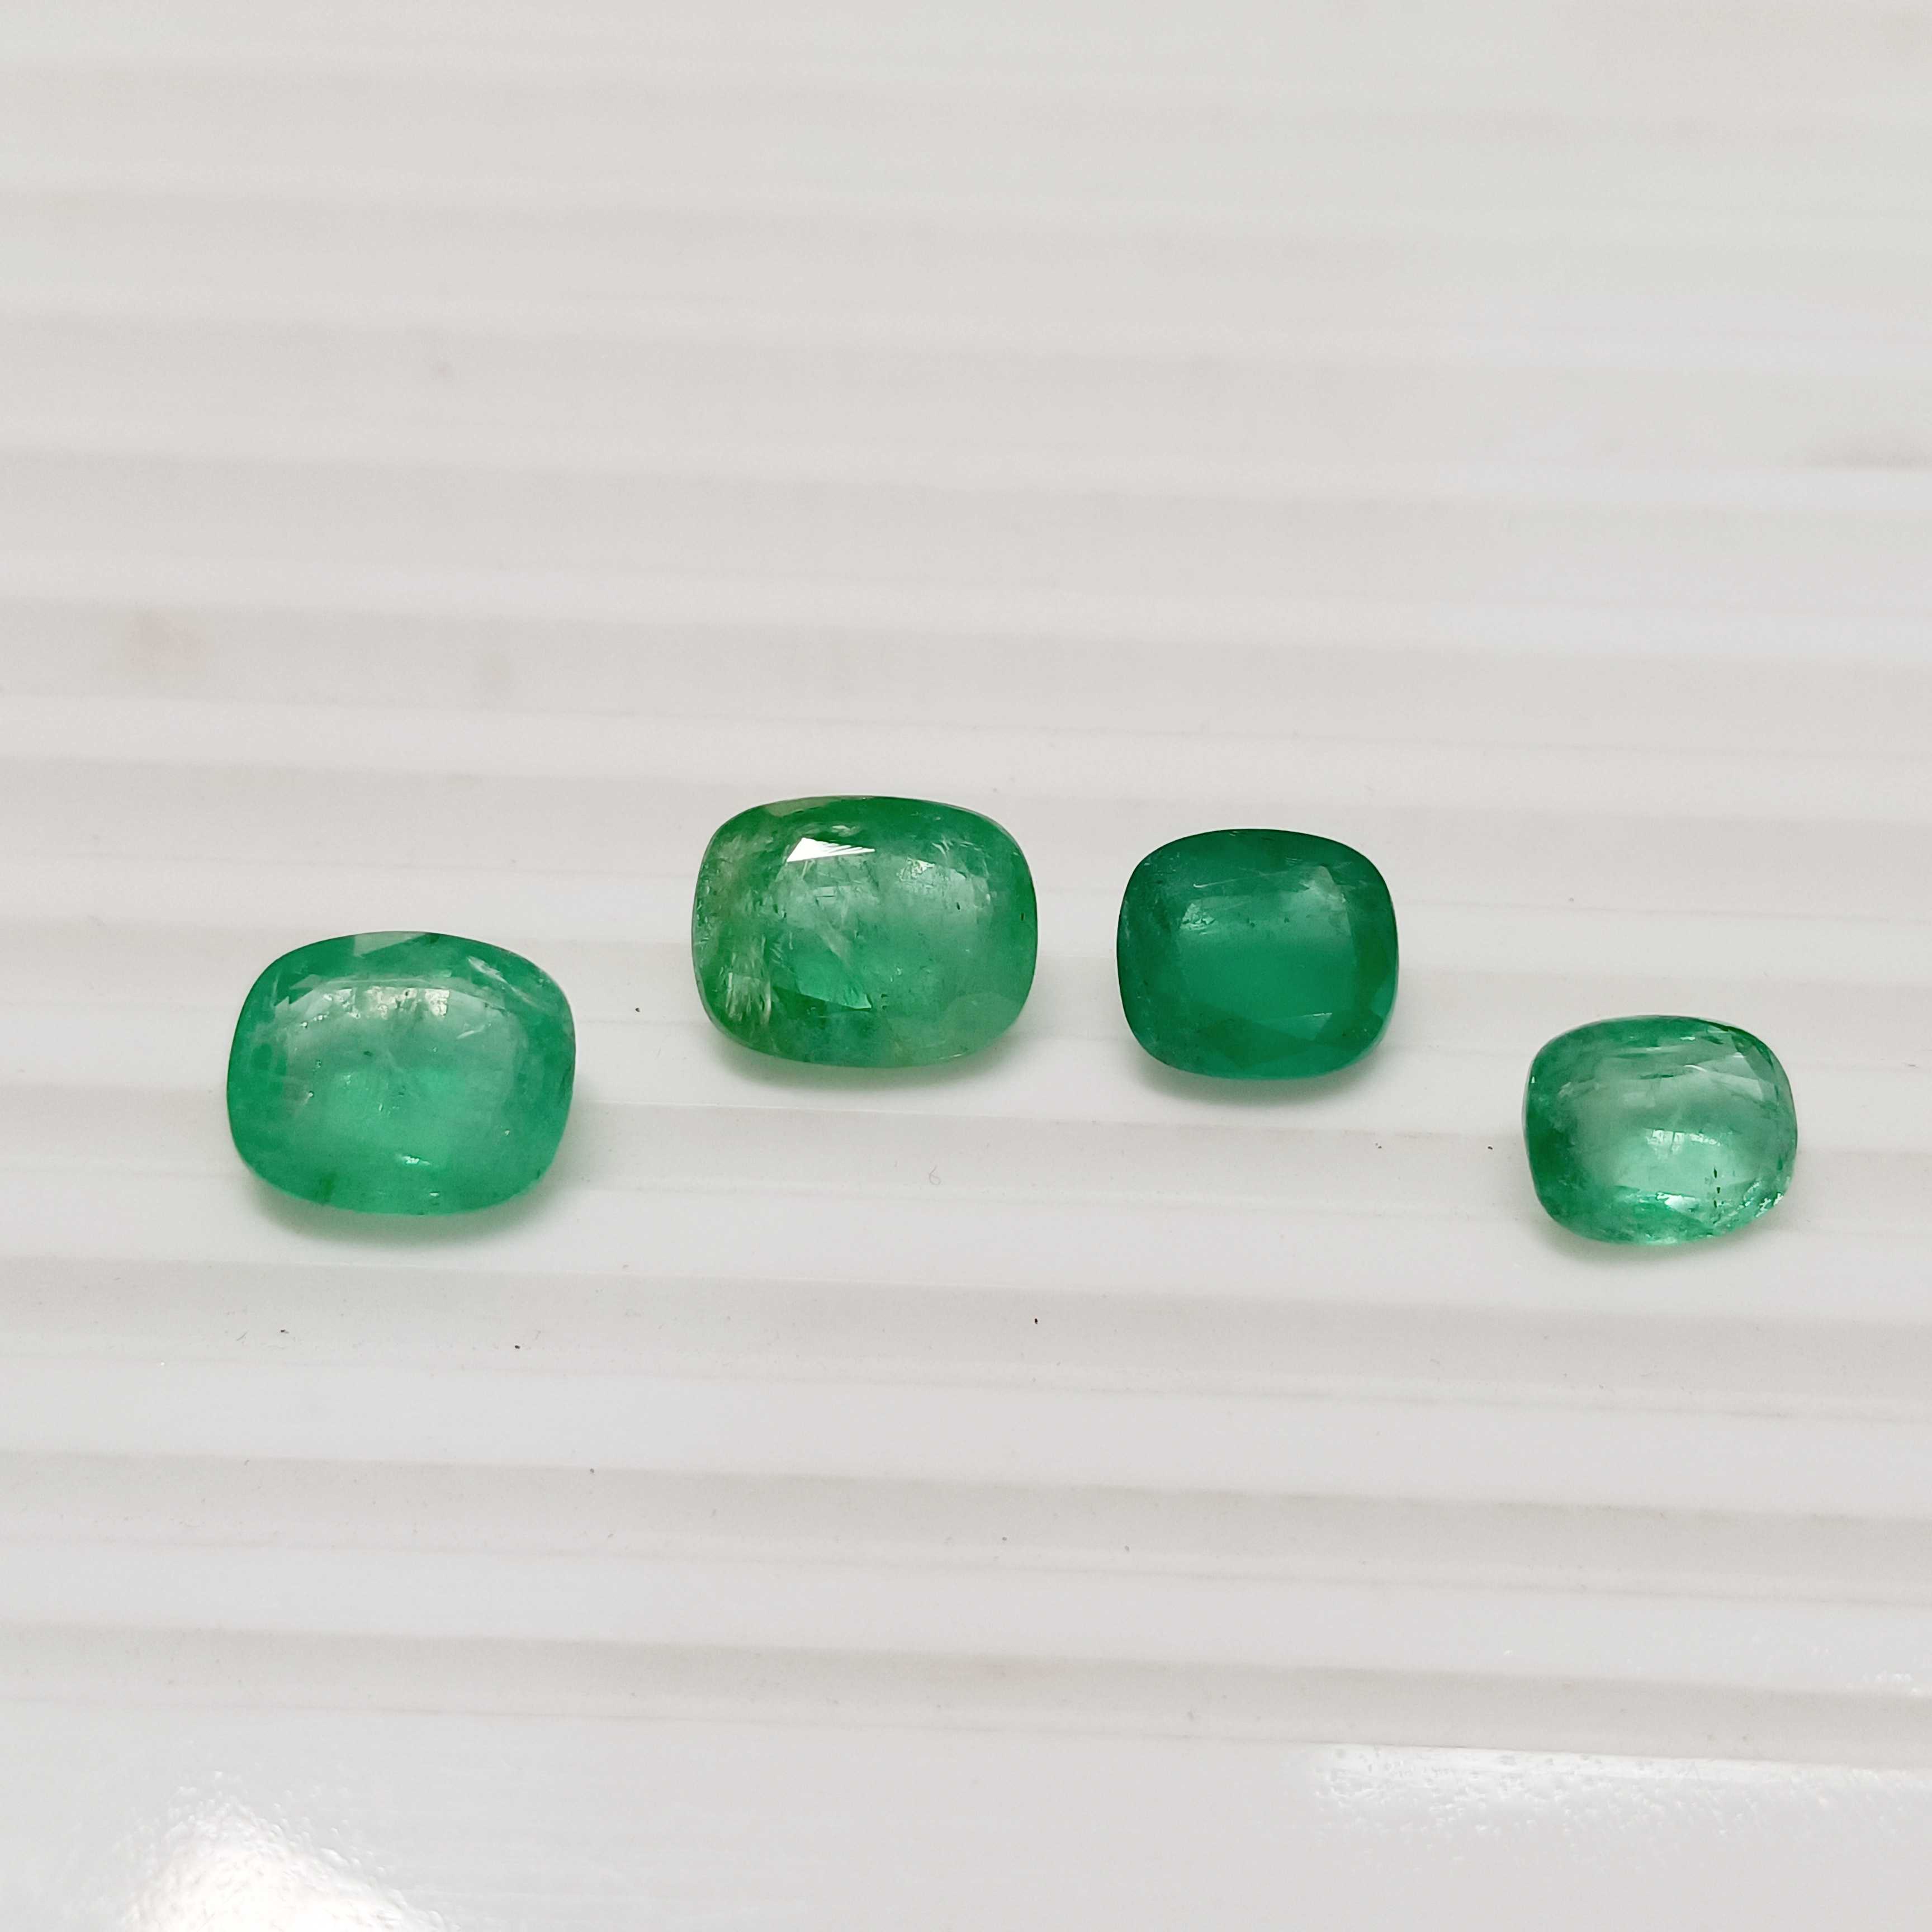 13.75ct medium green cushion cut Ethiopian emerald parcel /